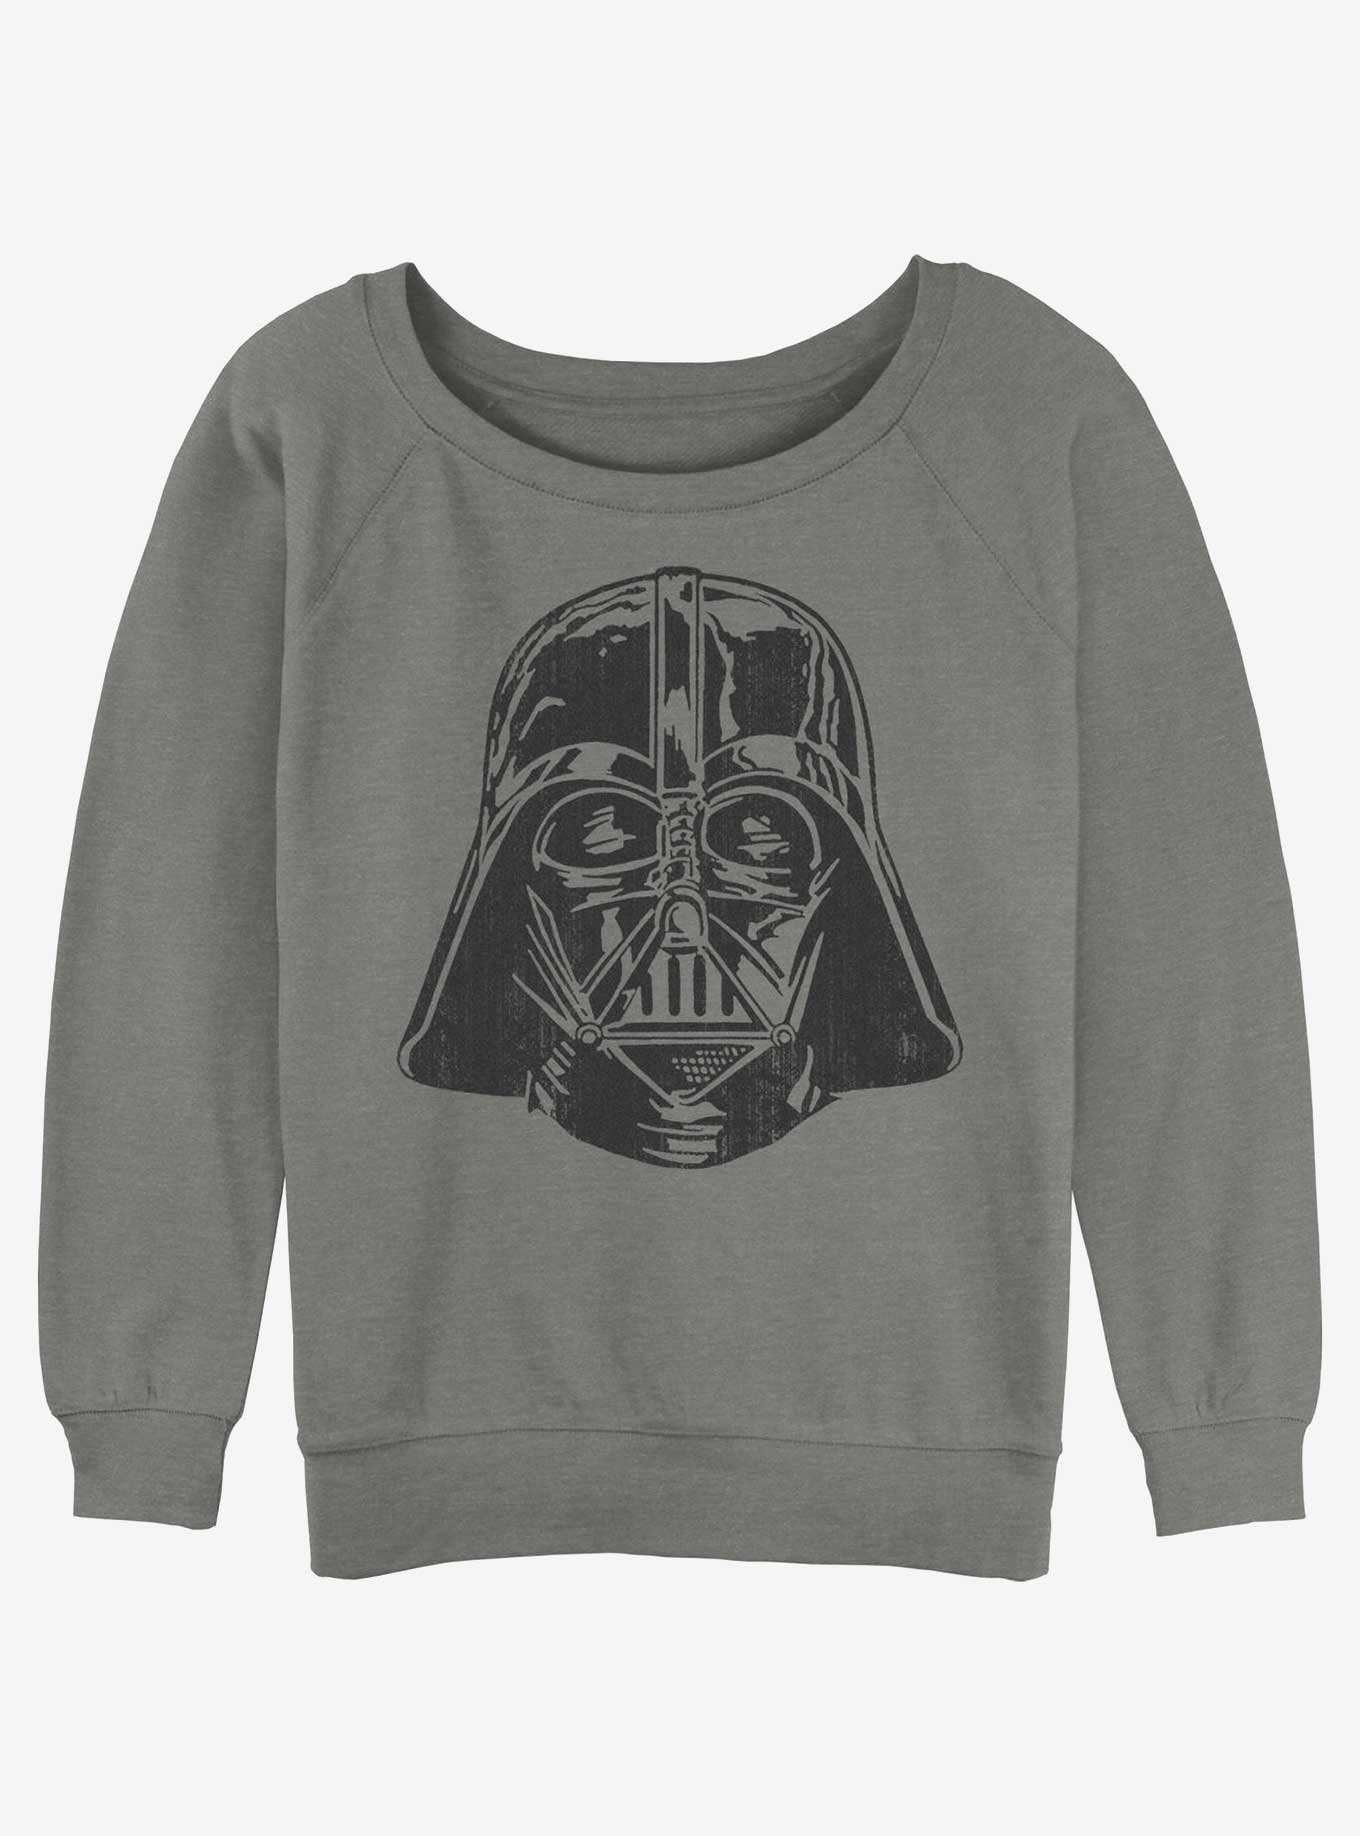 Star Wars Darth Vader Face Girls Slouchy Sweatshirt, , hi-res